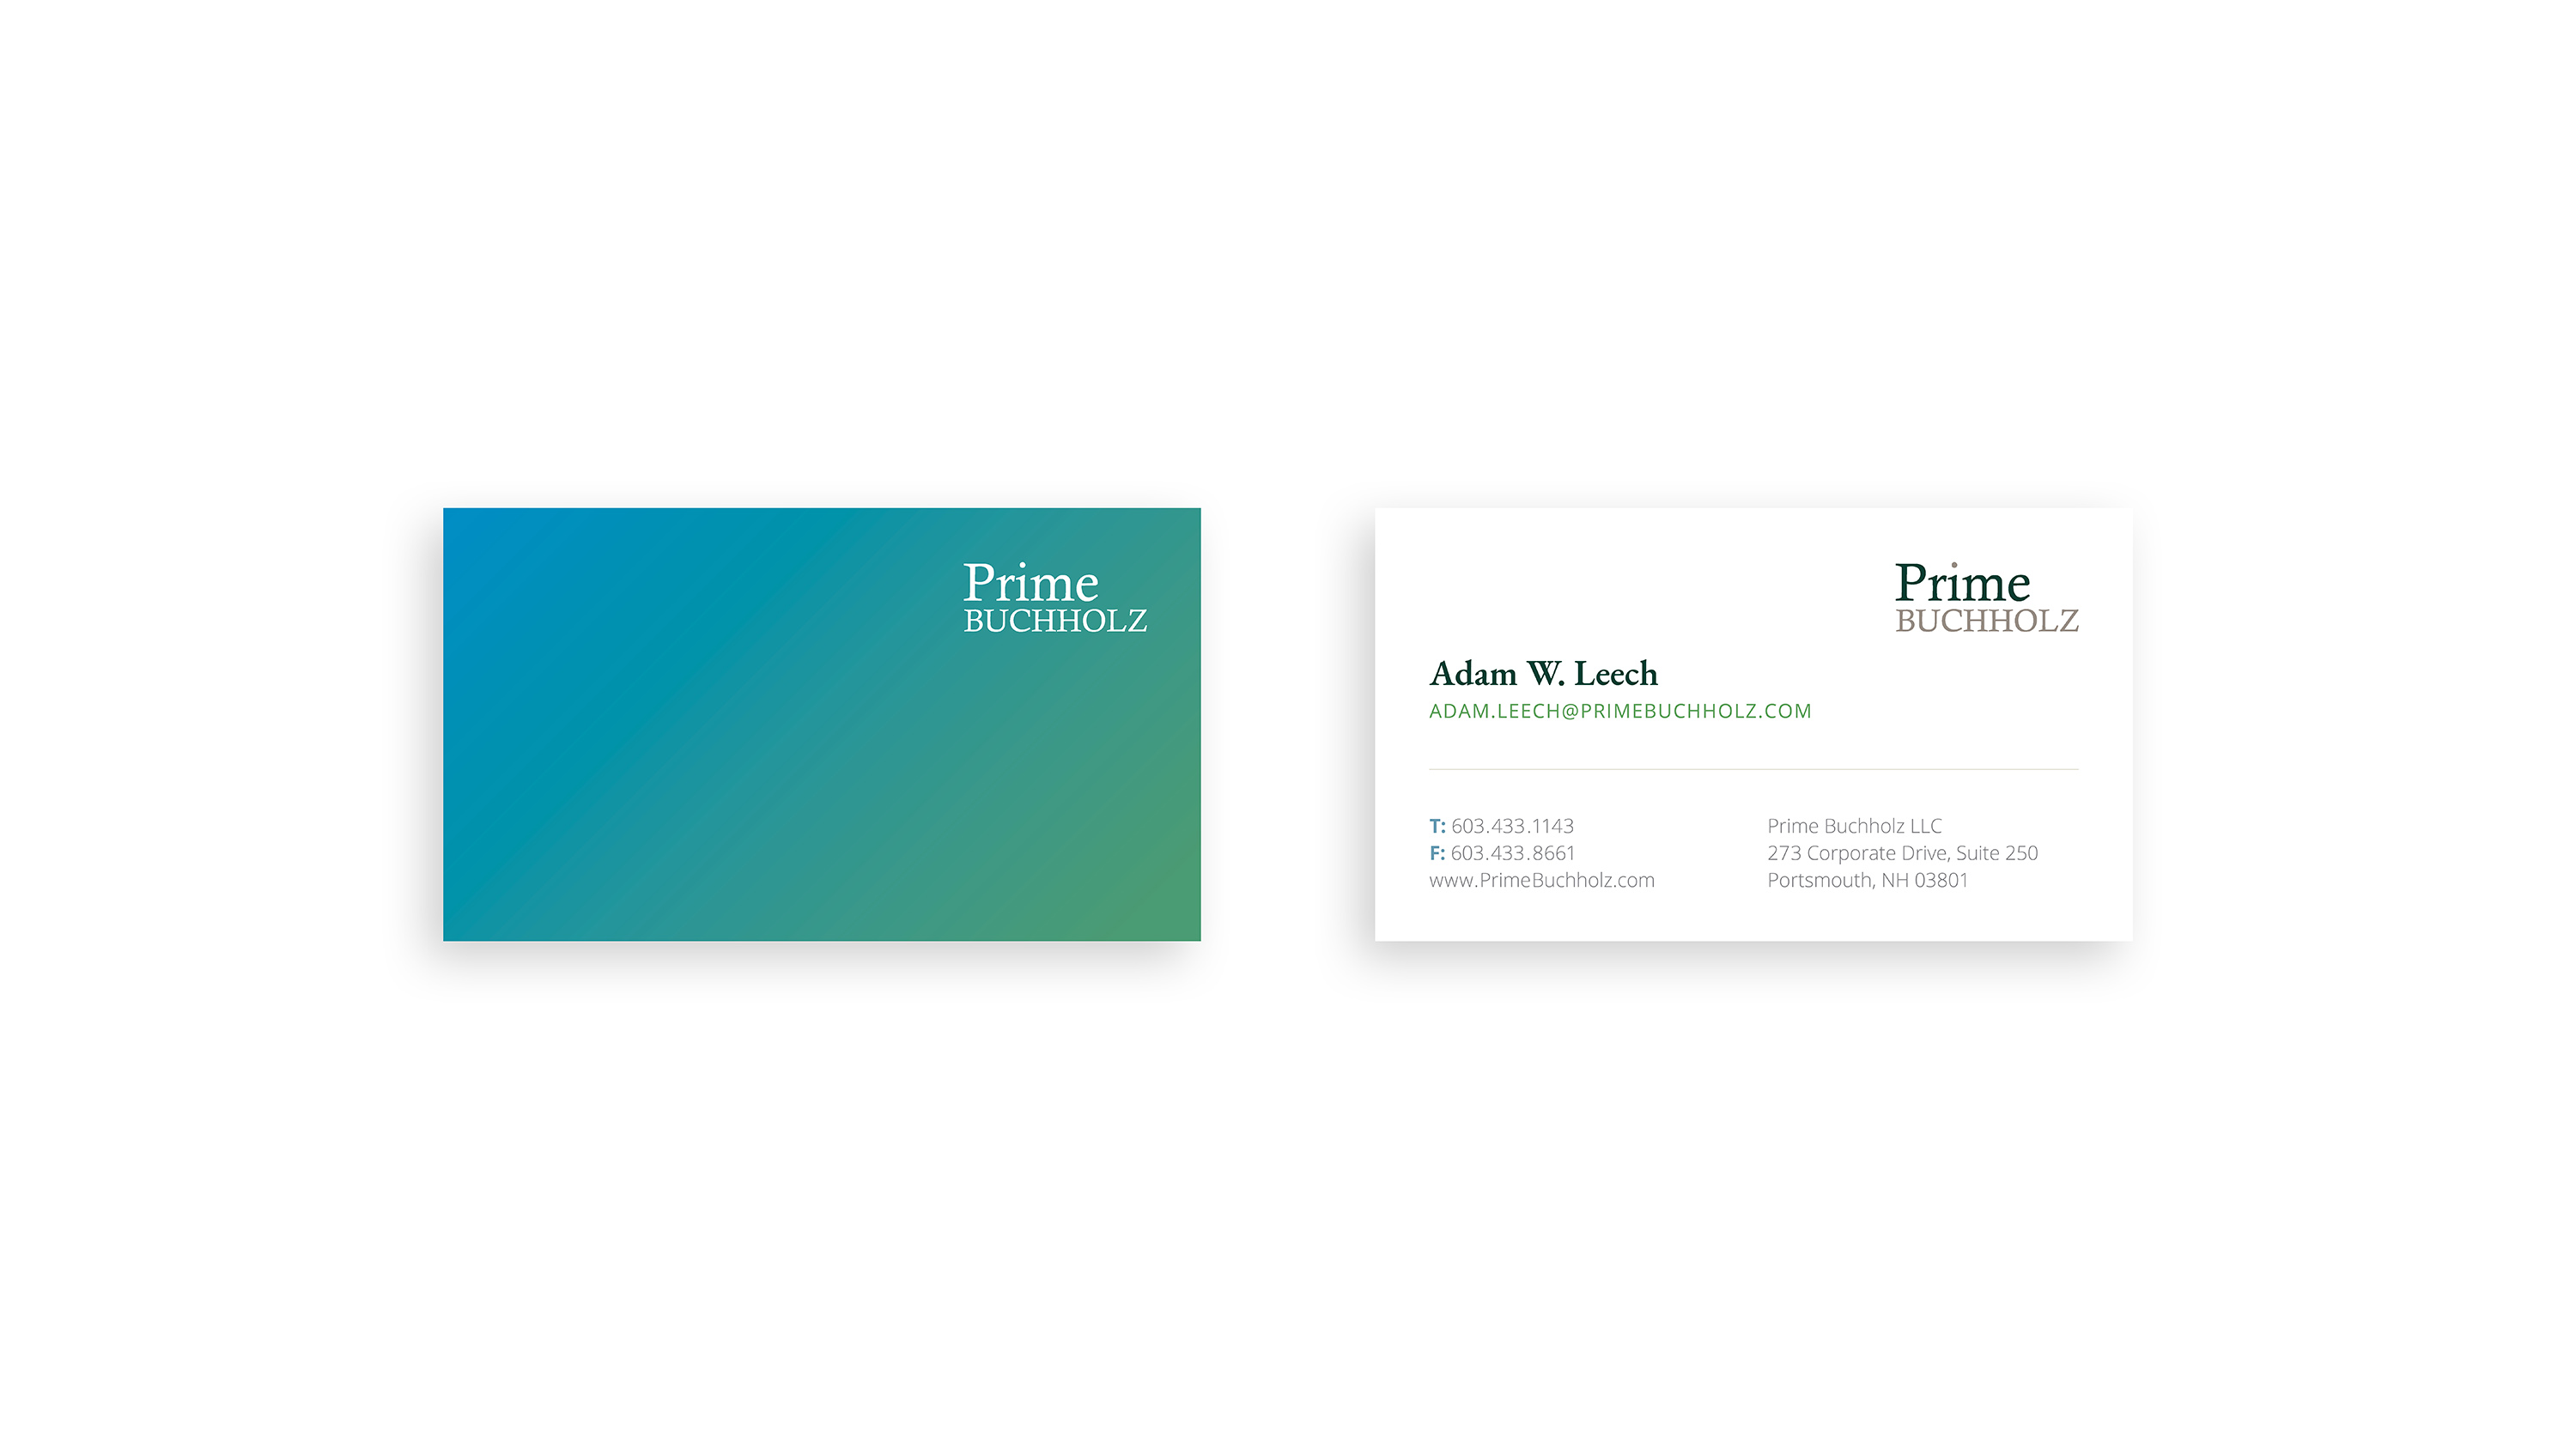 Prime_Buchholz_Business Card Design